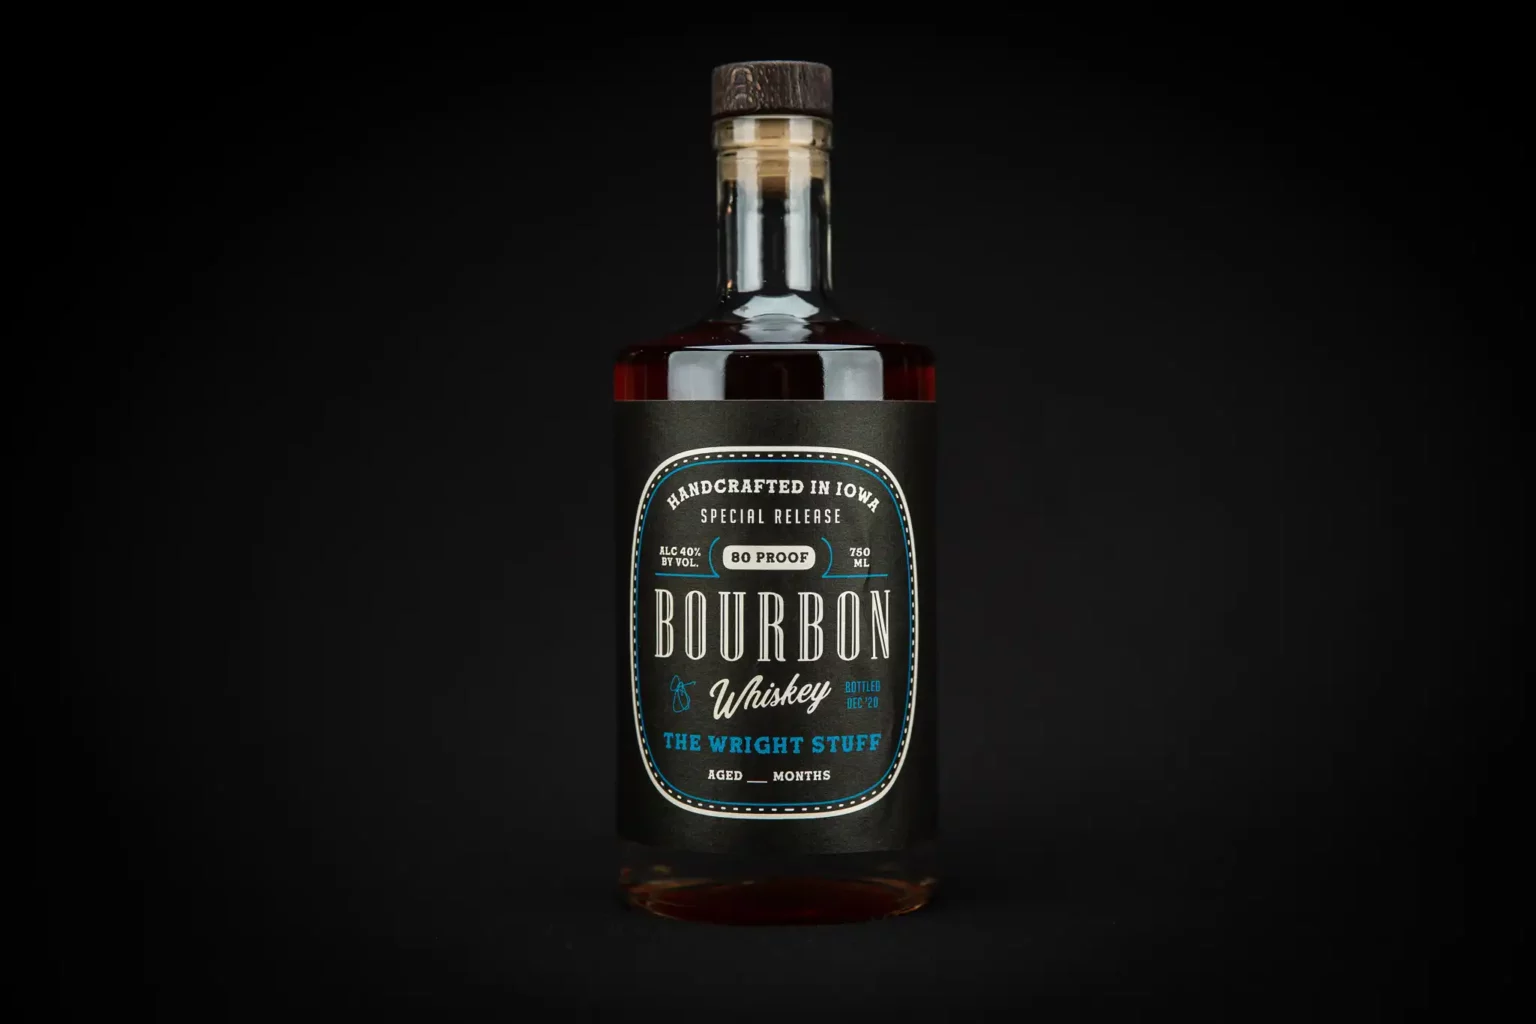 featured-spirit-the-wright-stuff-bourbon-whiskey